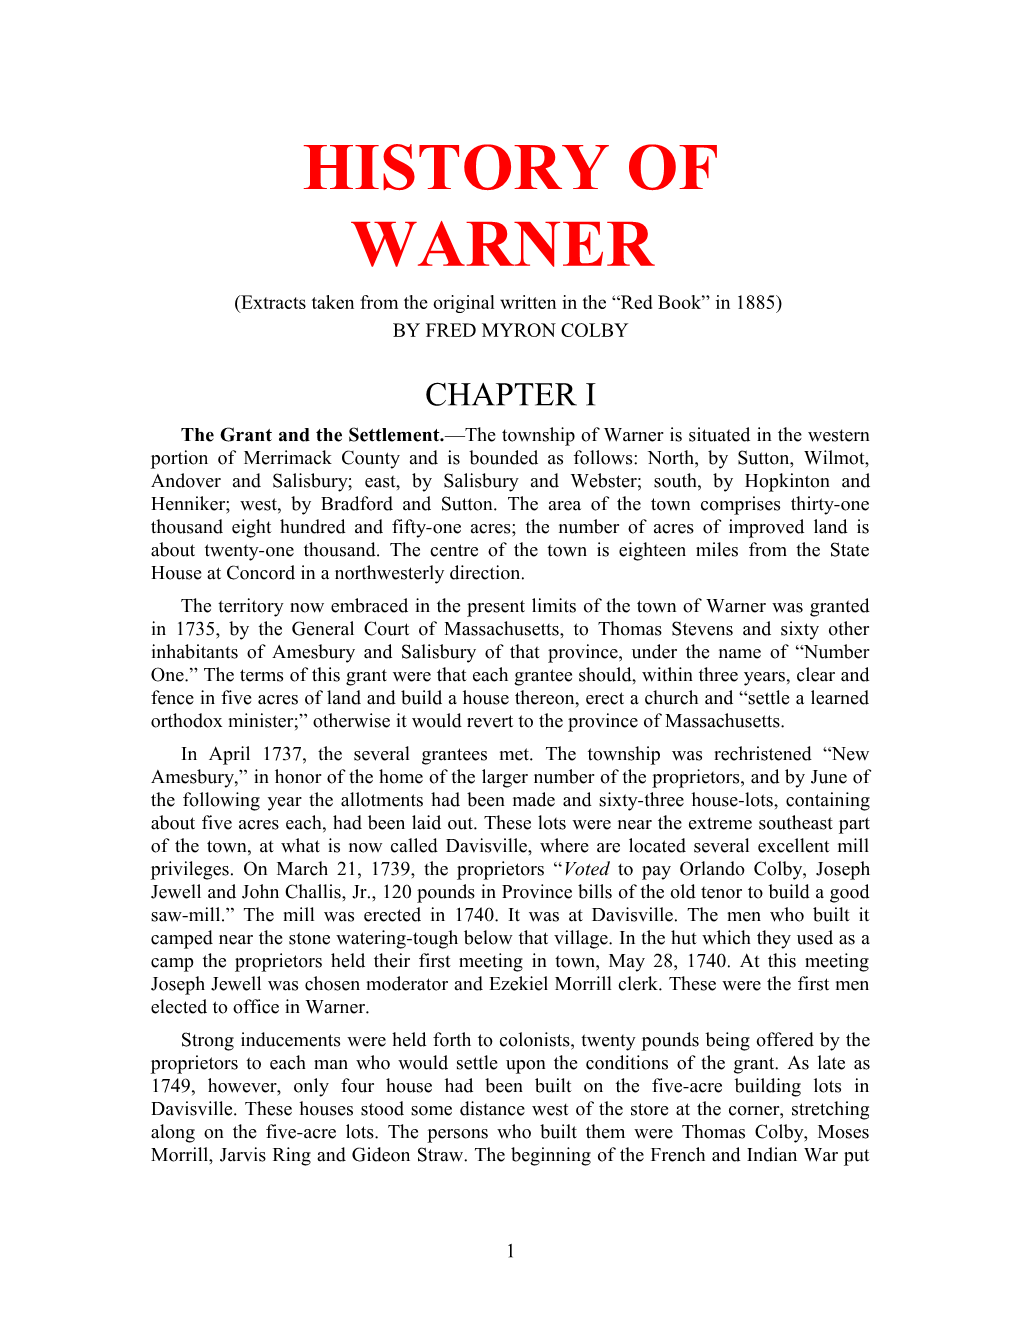 History of Warner